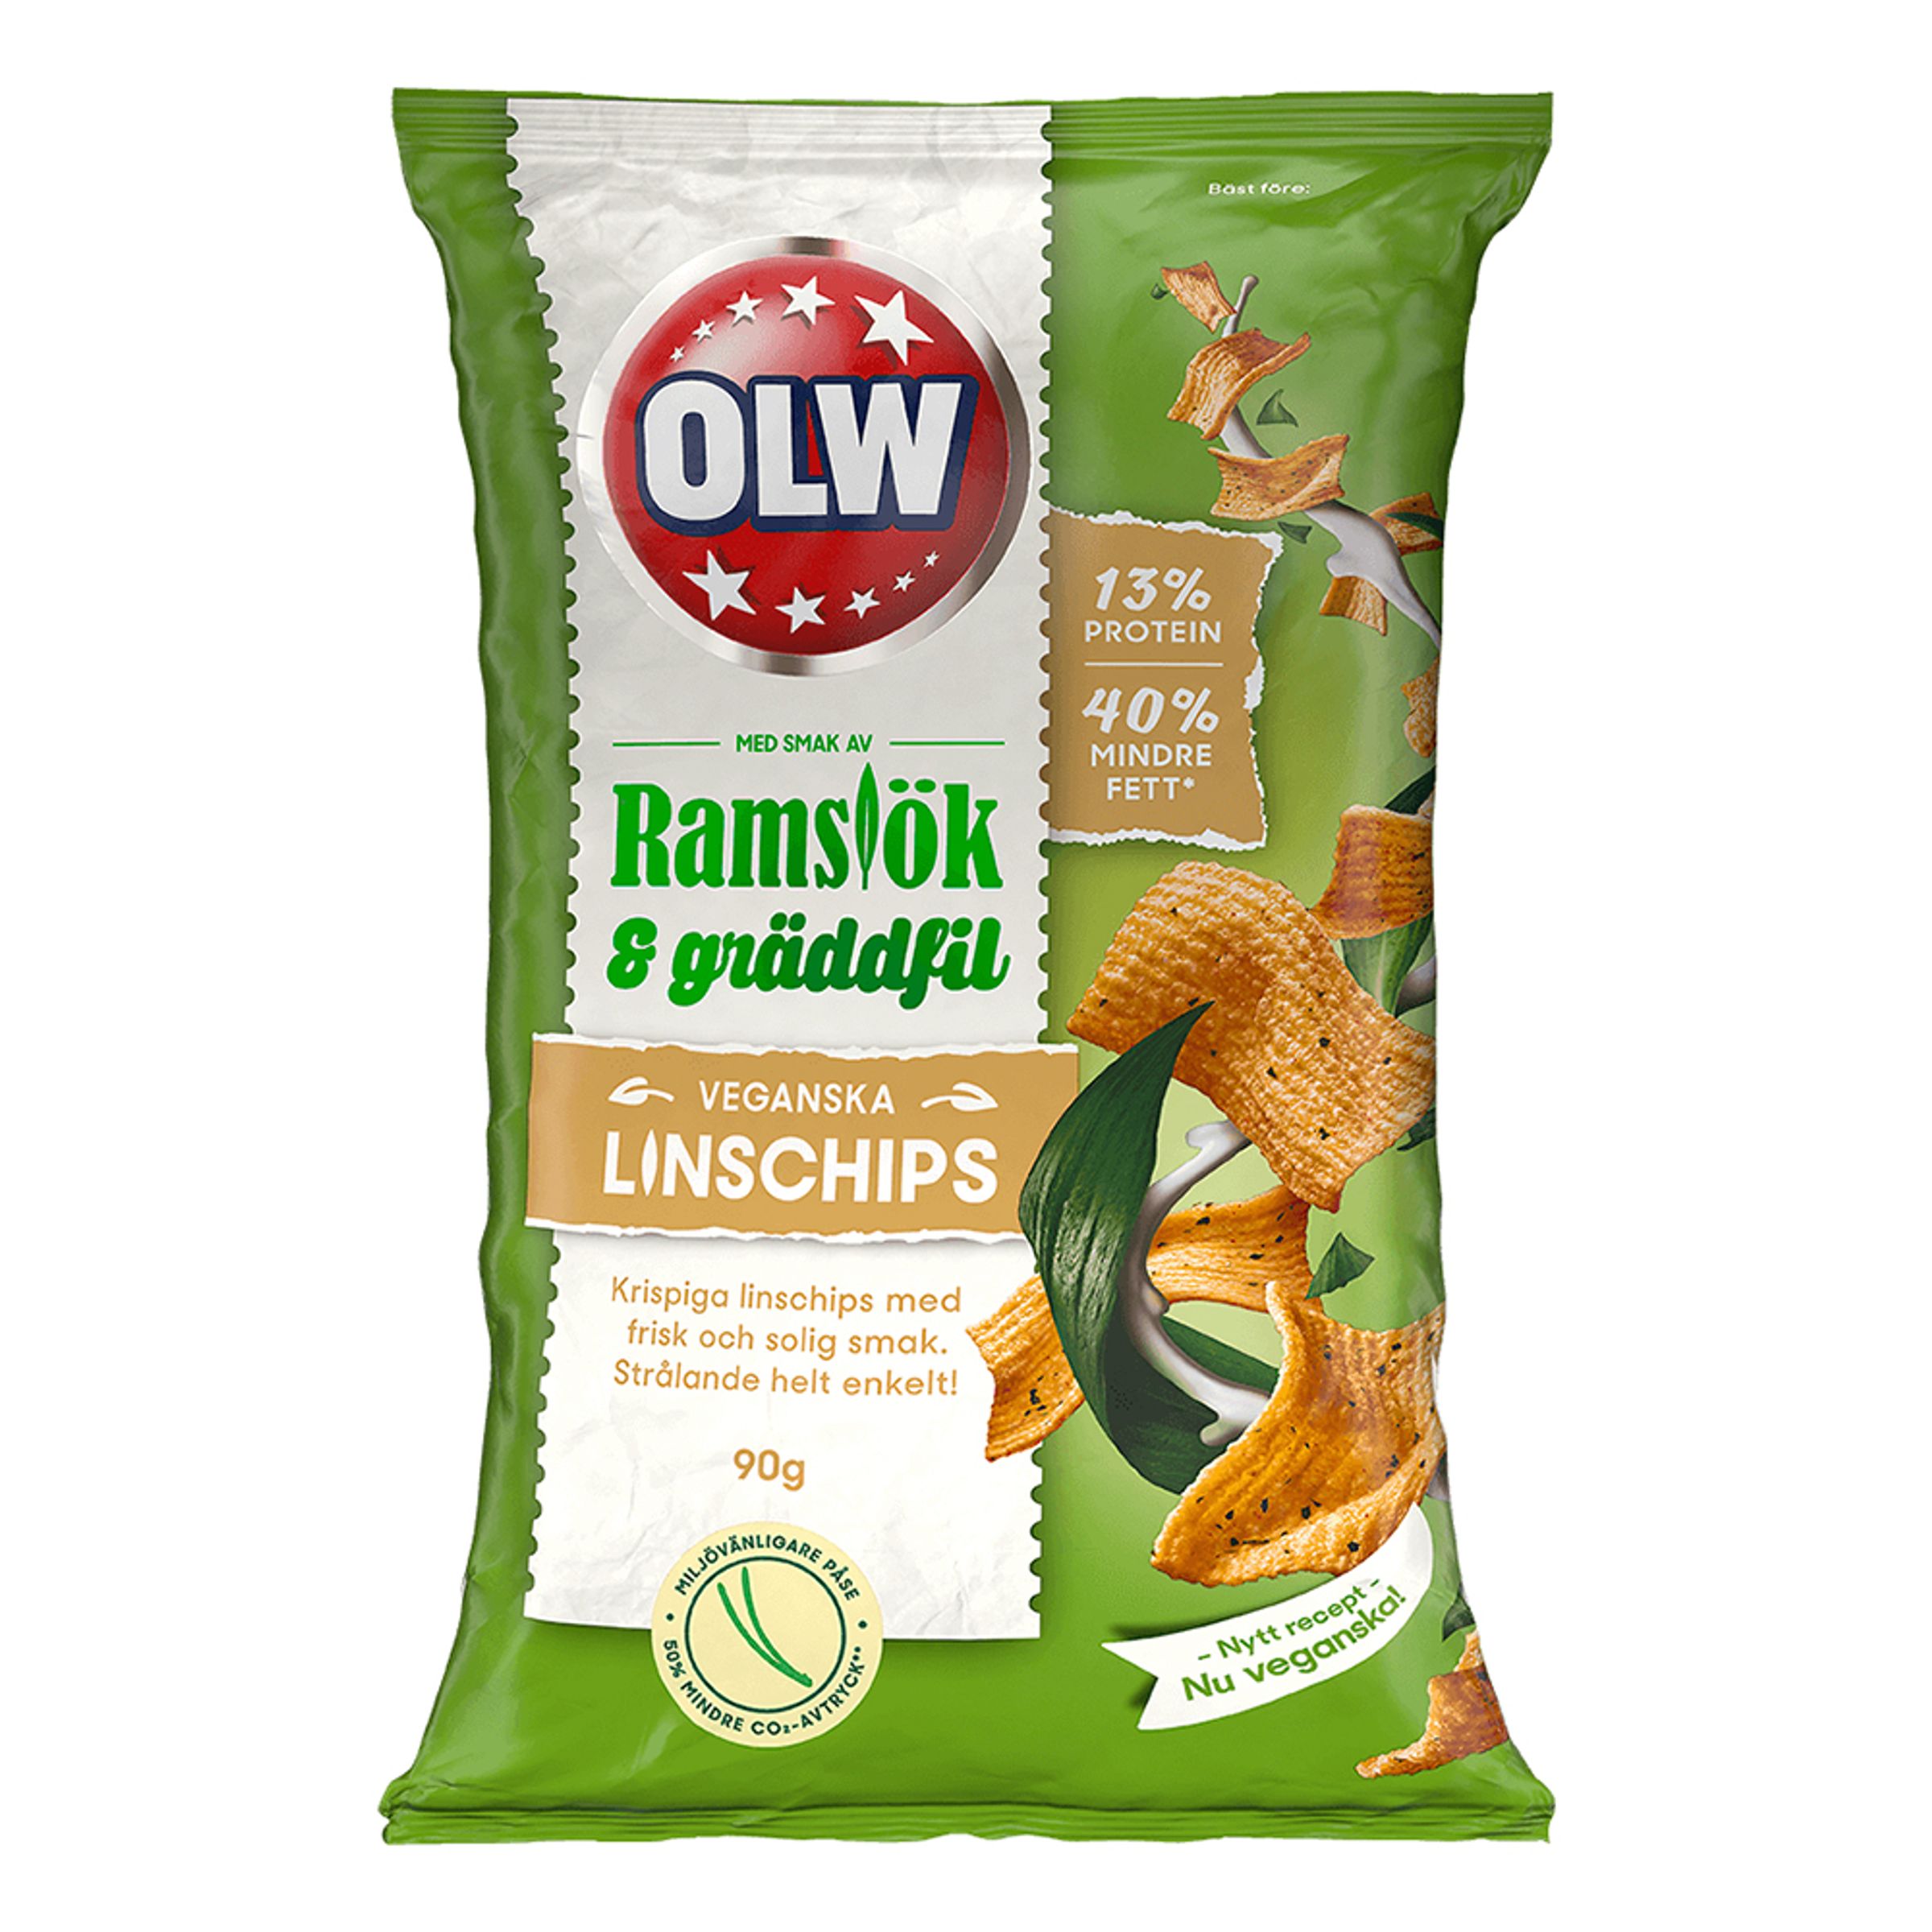 OLW Linschips Ramslök & Gräddfil - 90 gram